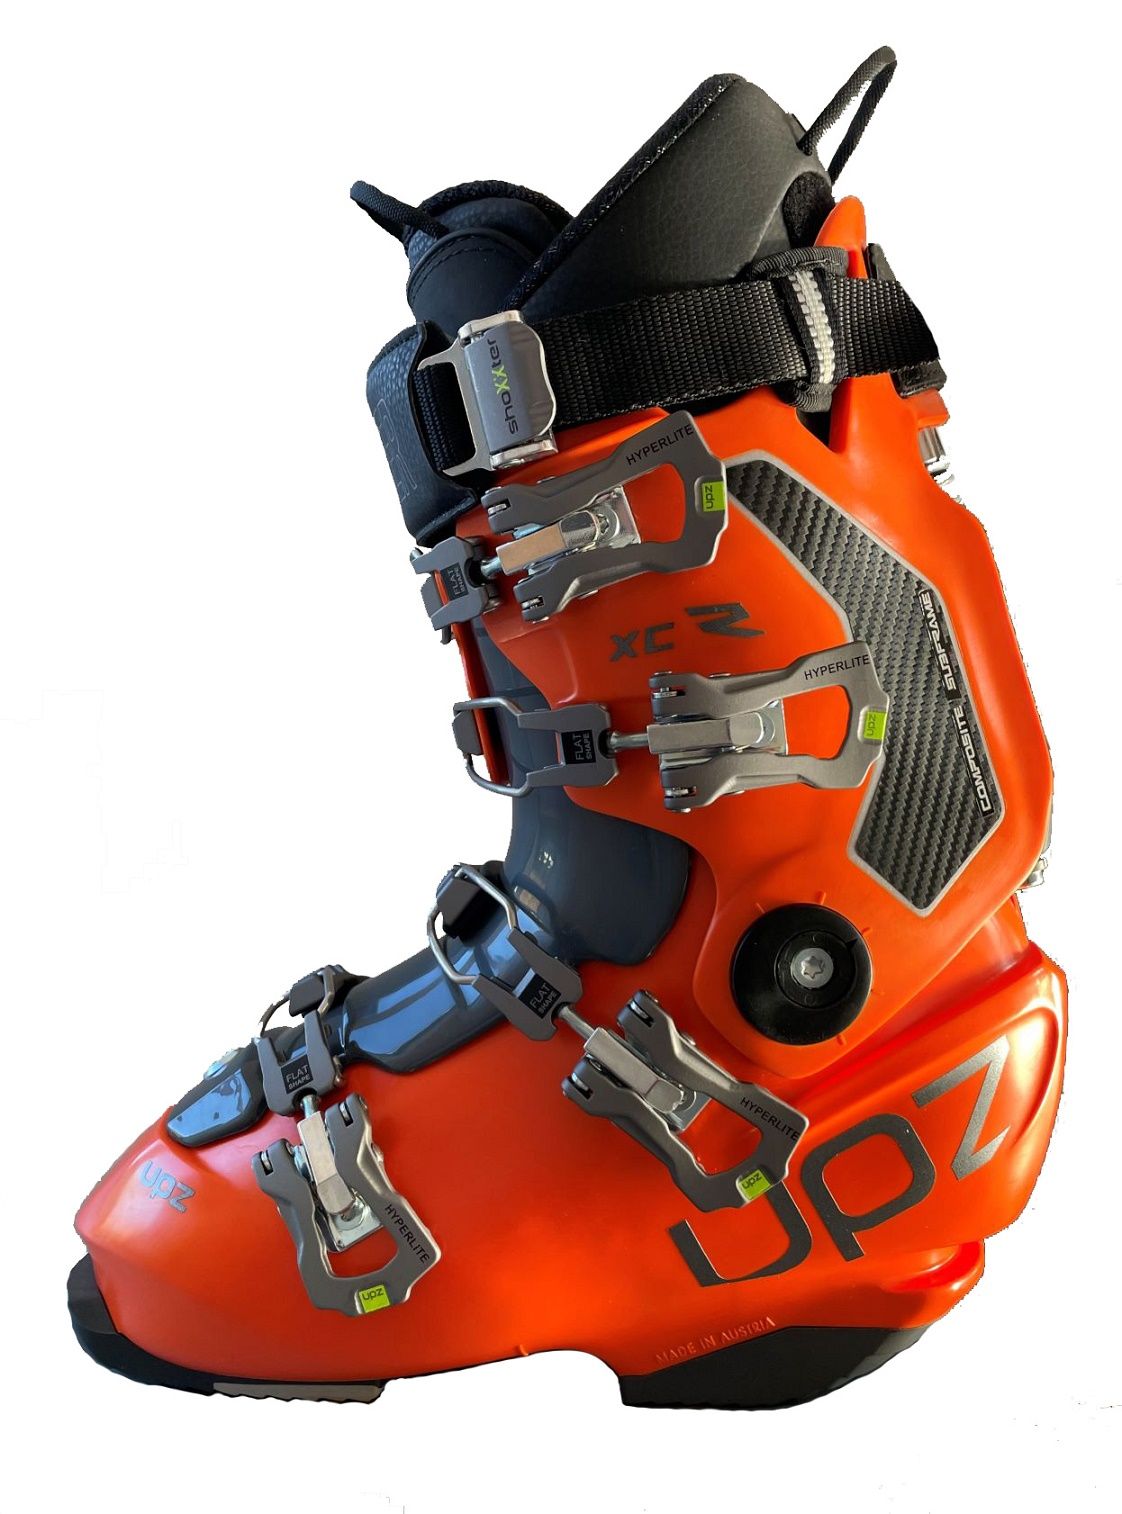 22-23 model 大きく流れが変わる!? UPZ snowboard boots | Around 50's ...